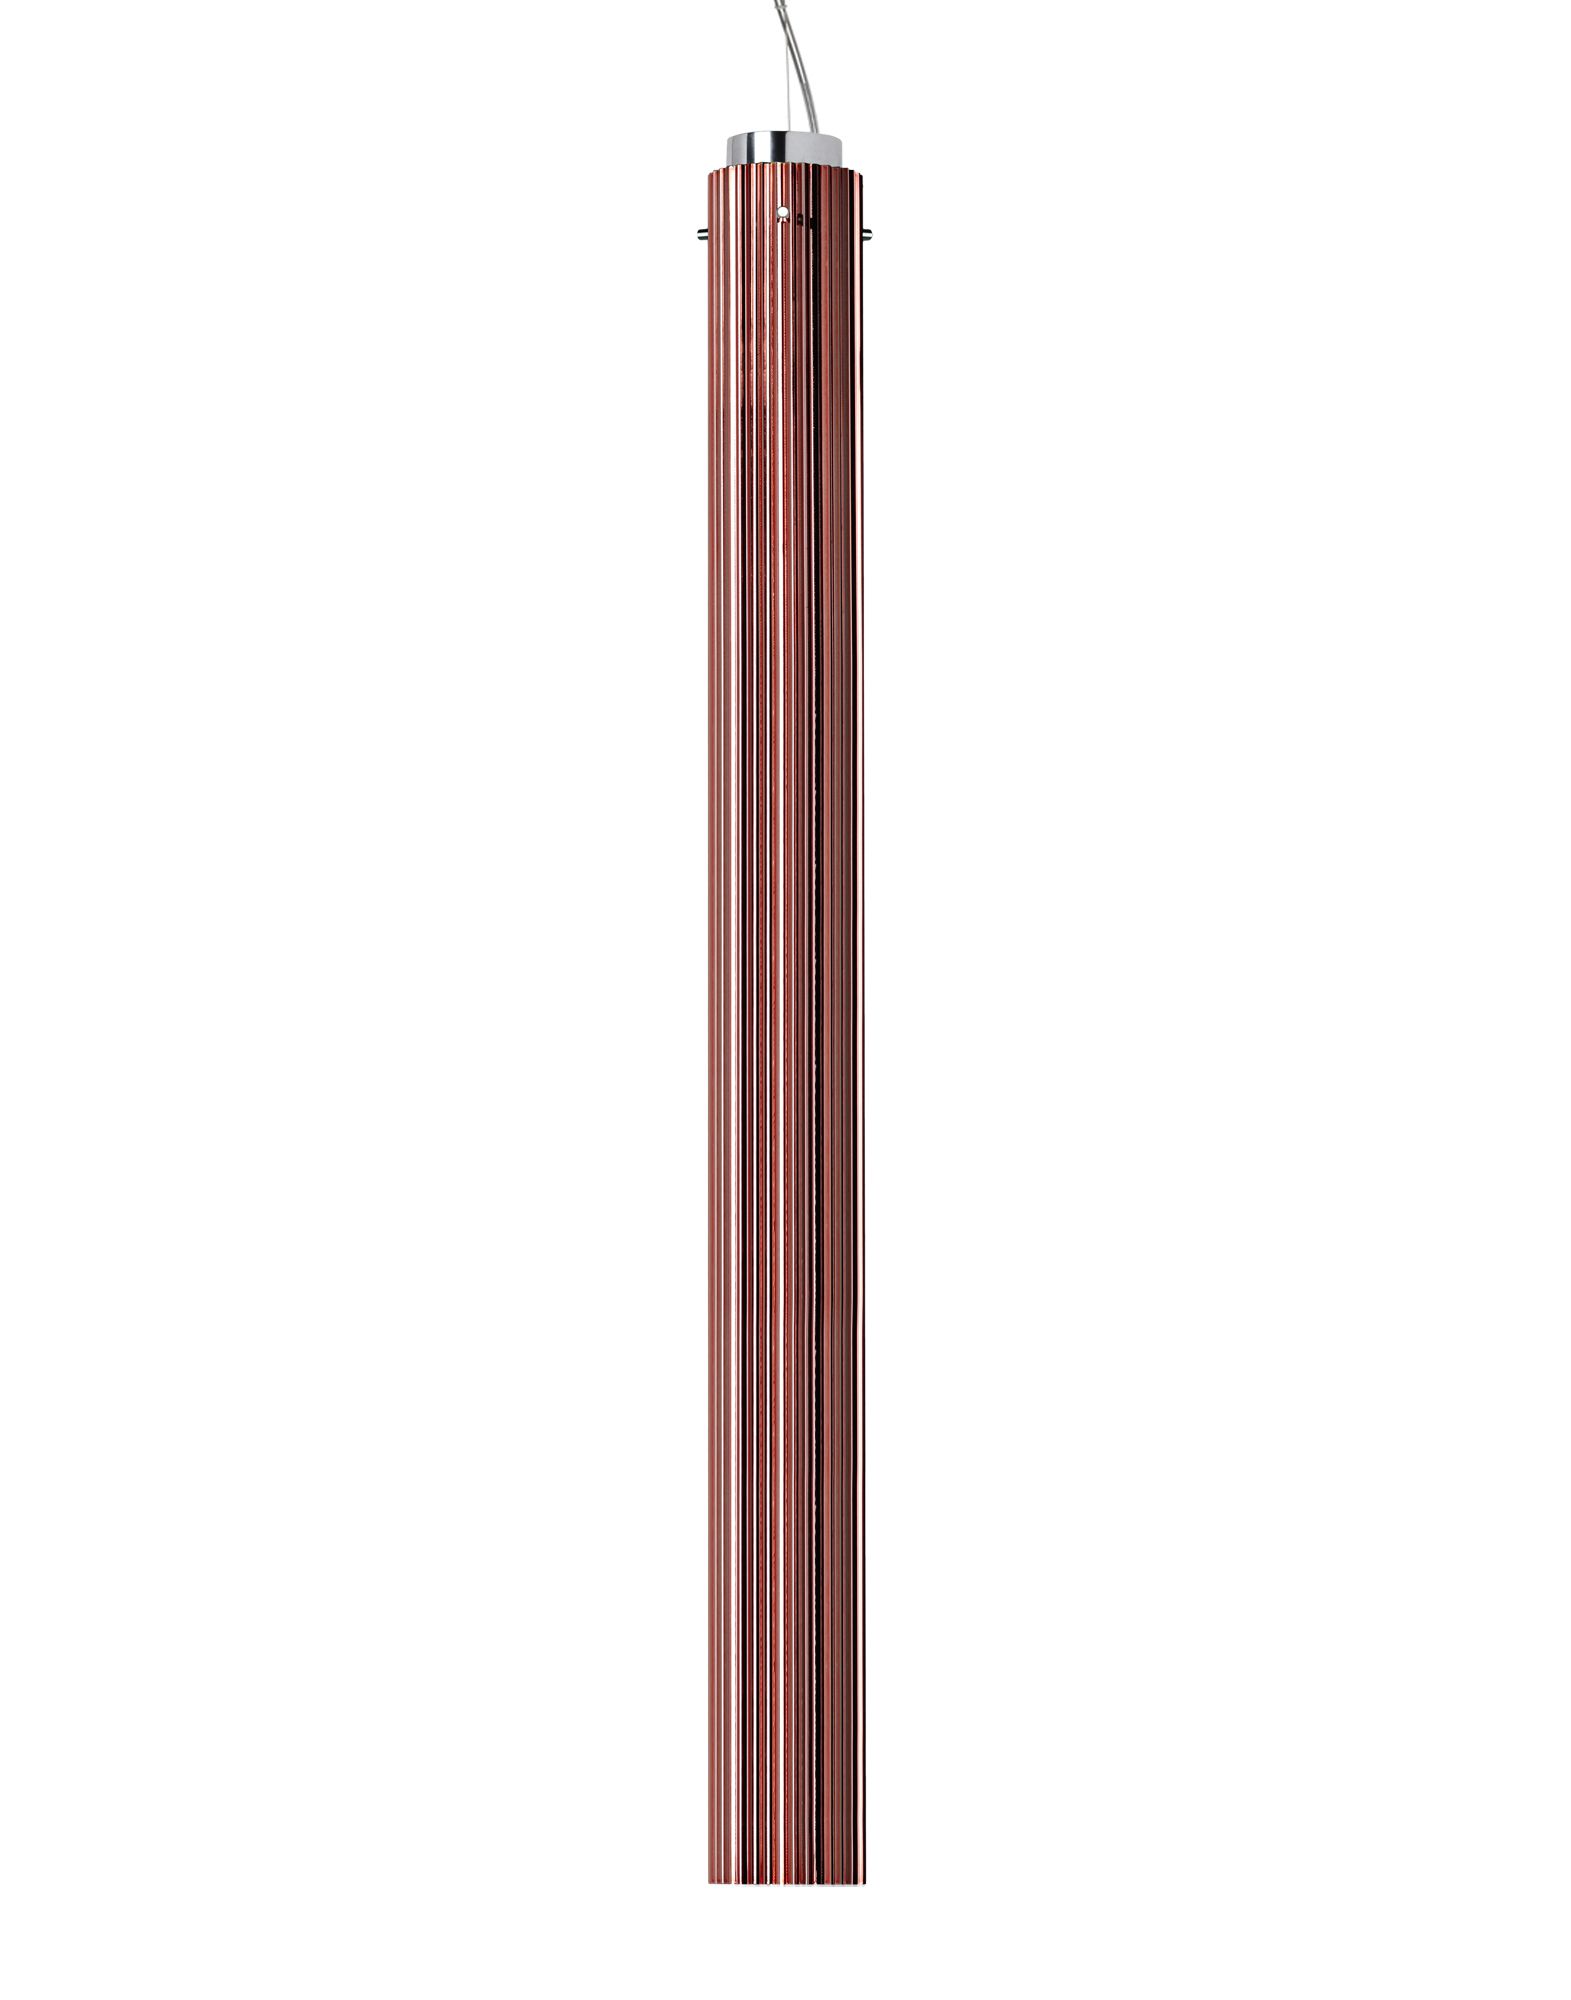 Suspensie Kartell by Laufen Rifly design Ludovica & Roberto Palomba LED 10W h90cm cupru metalizat 10W